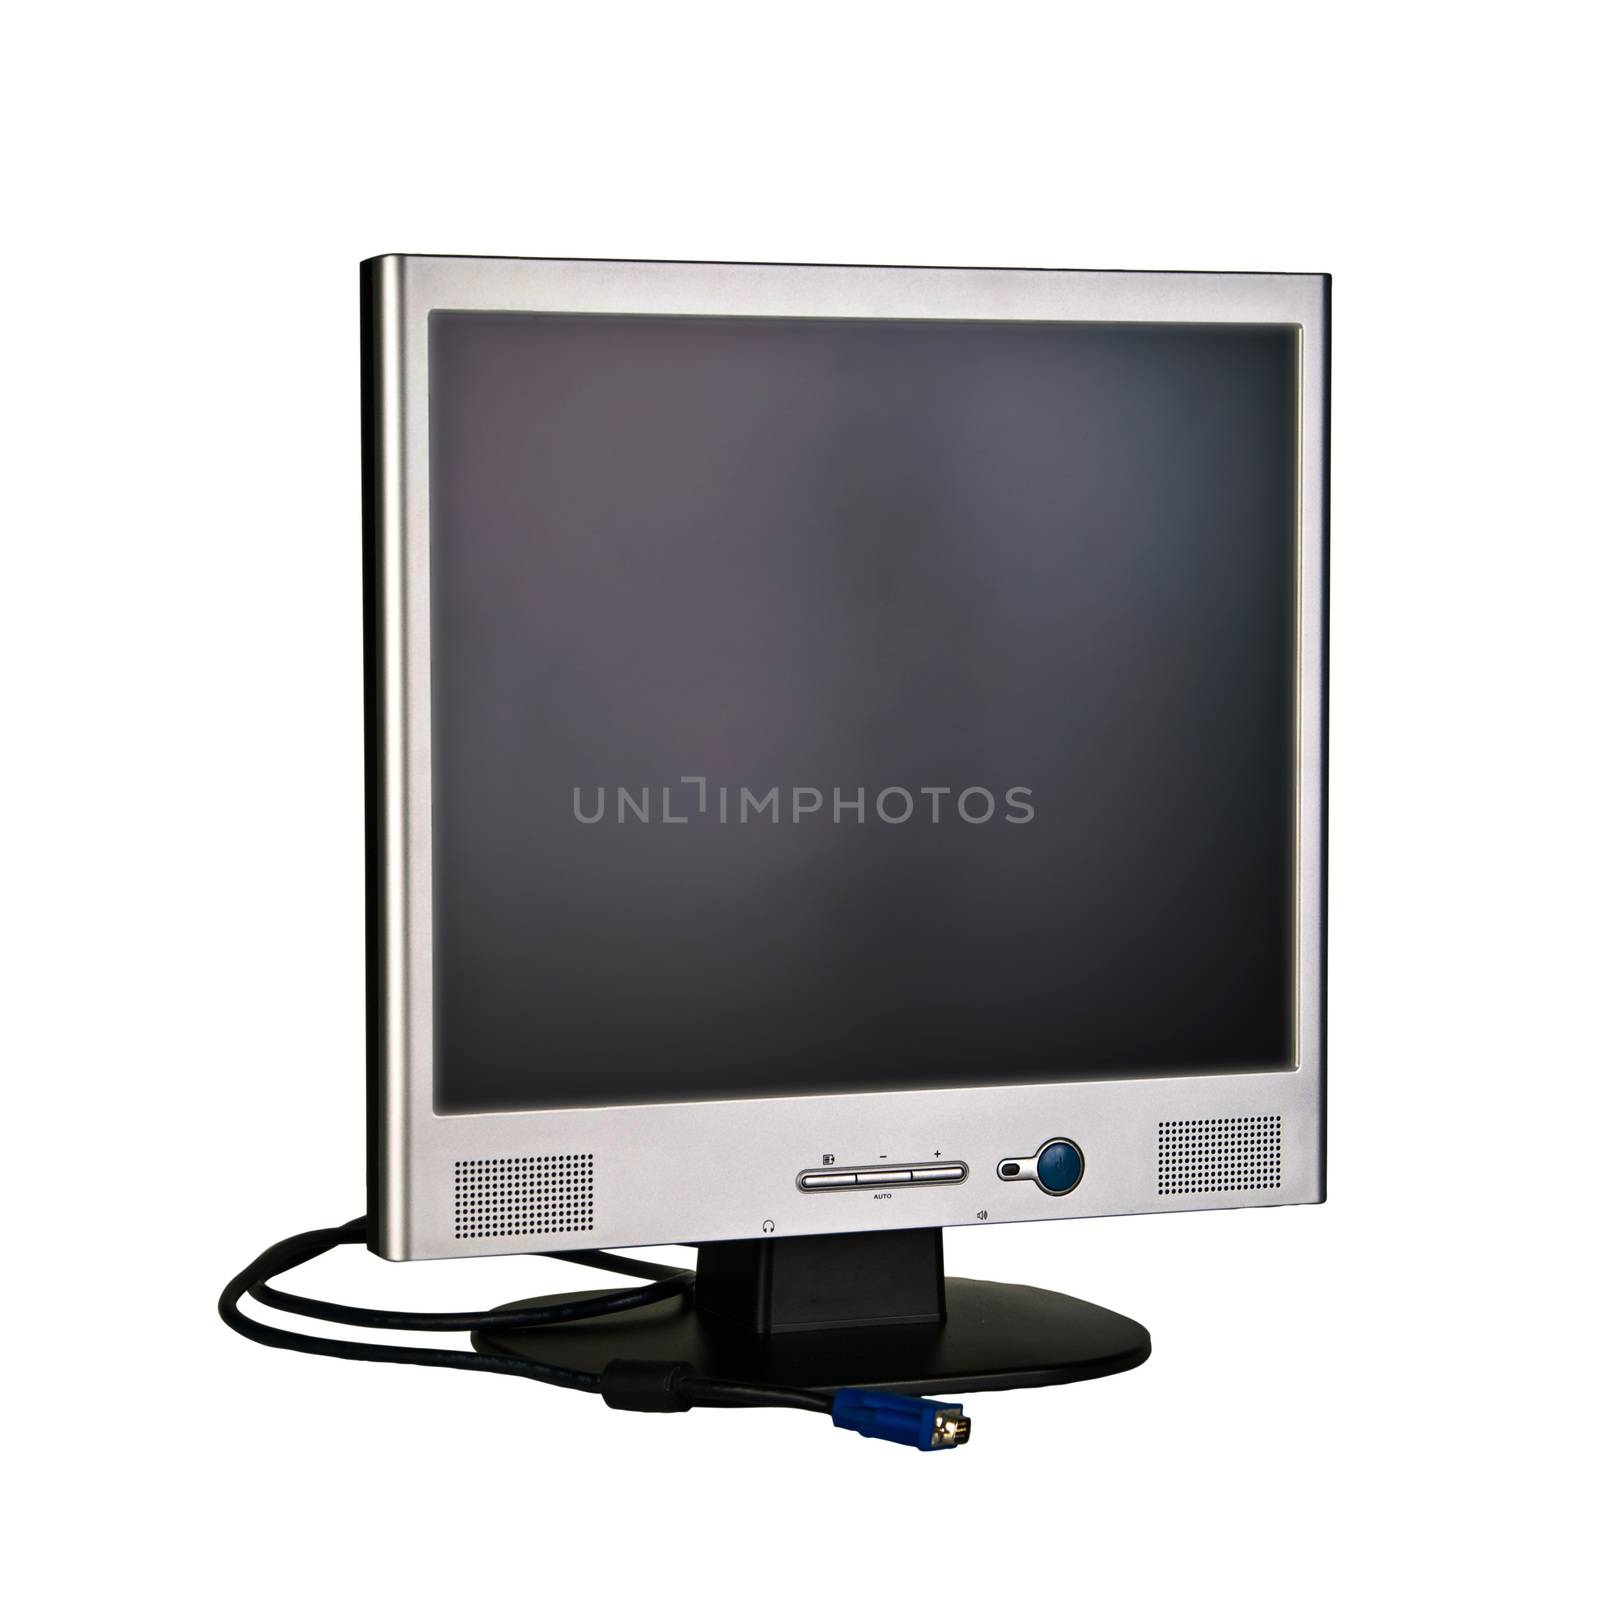 A flatscreen computer monitor and cable